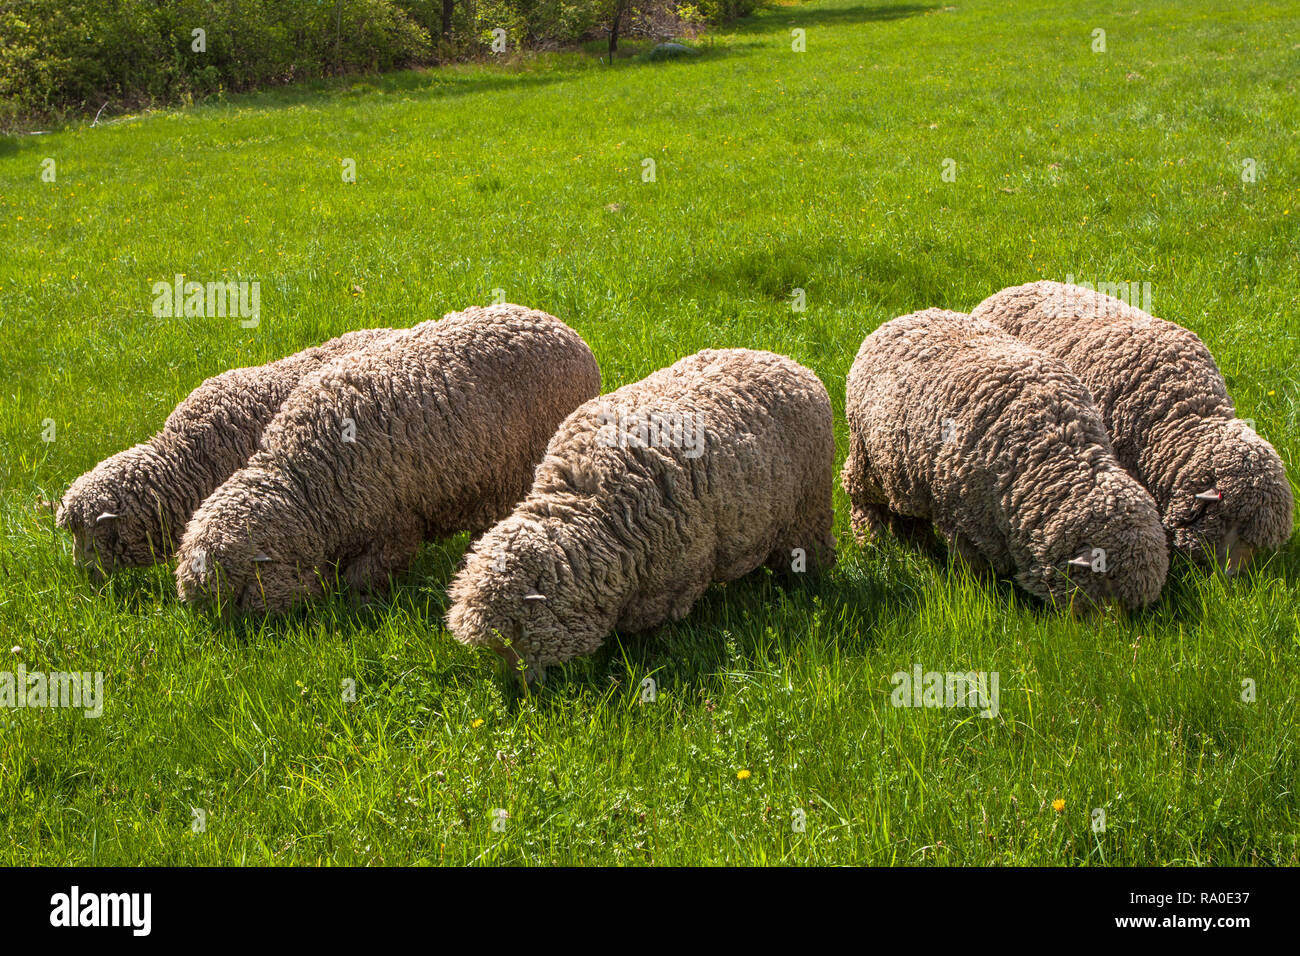 Five merino sheep grazing on spring grass Stock Photo